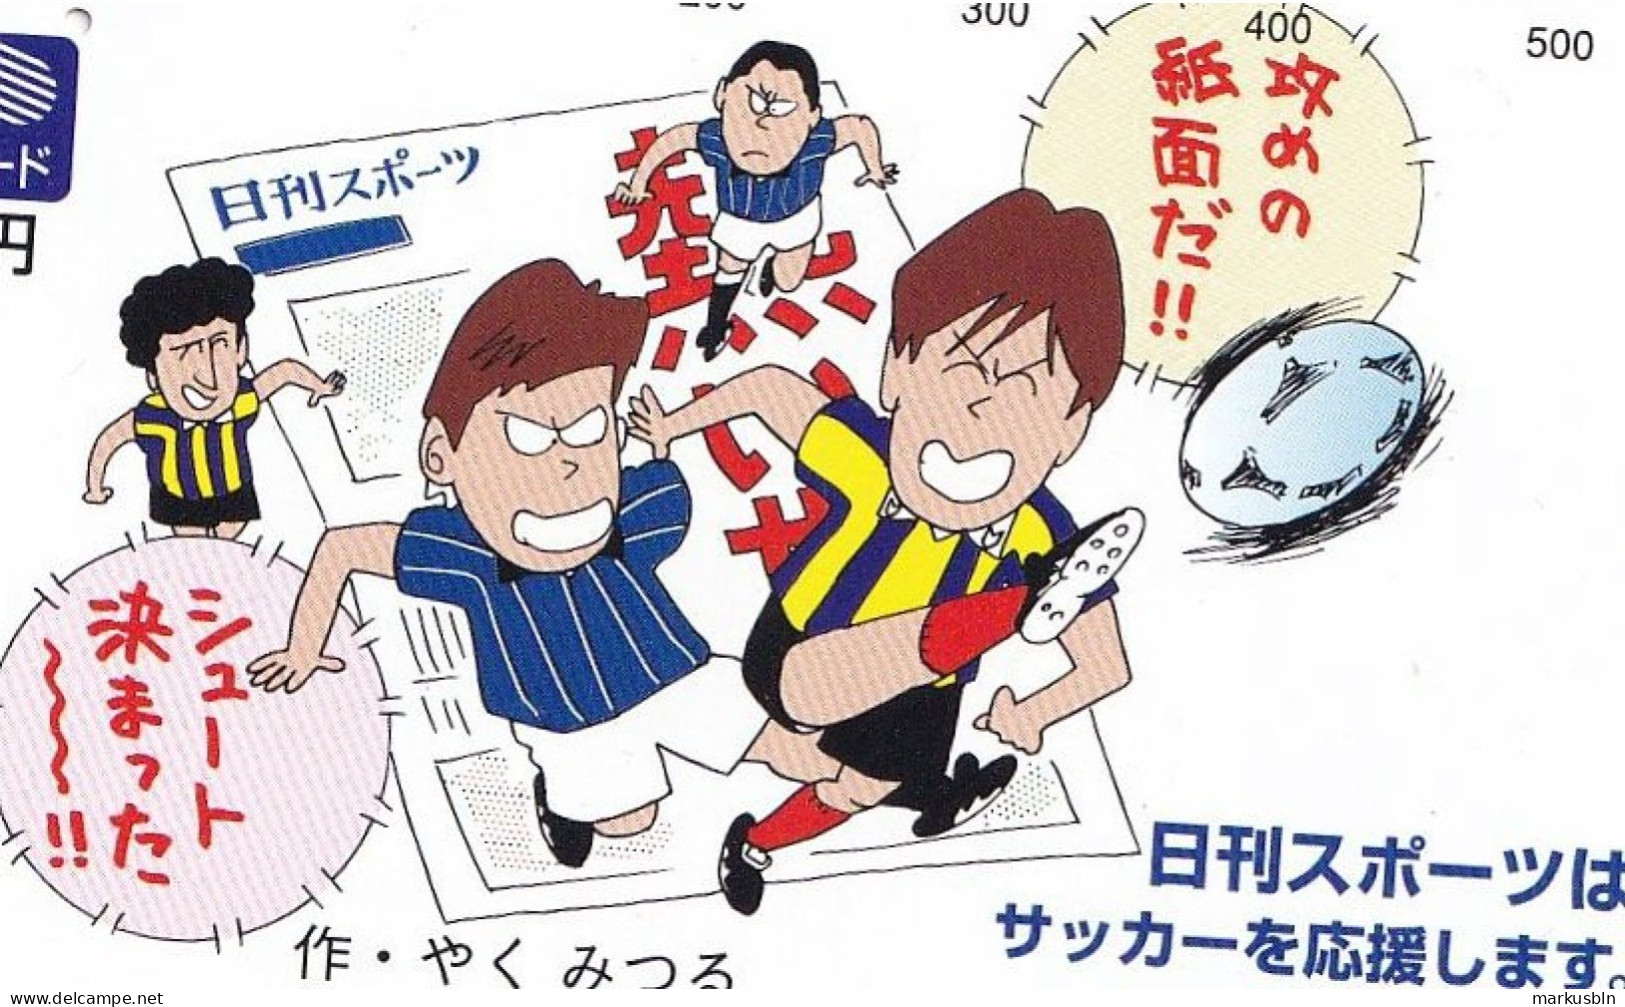 Japan Prepaid Library Card 500 - Nikkan Sports Advertisement Football Drawing Magazine - Japon